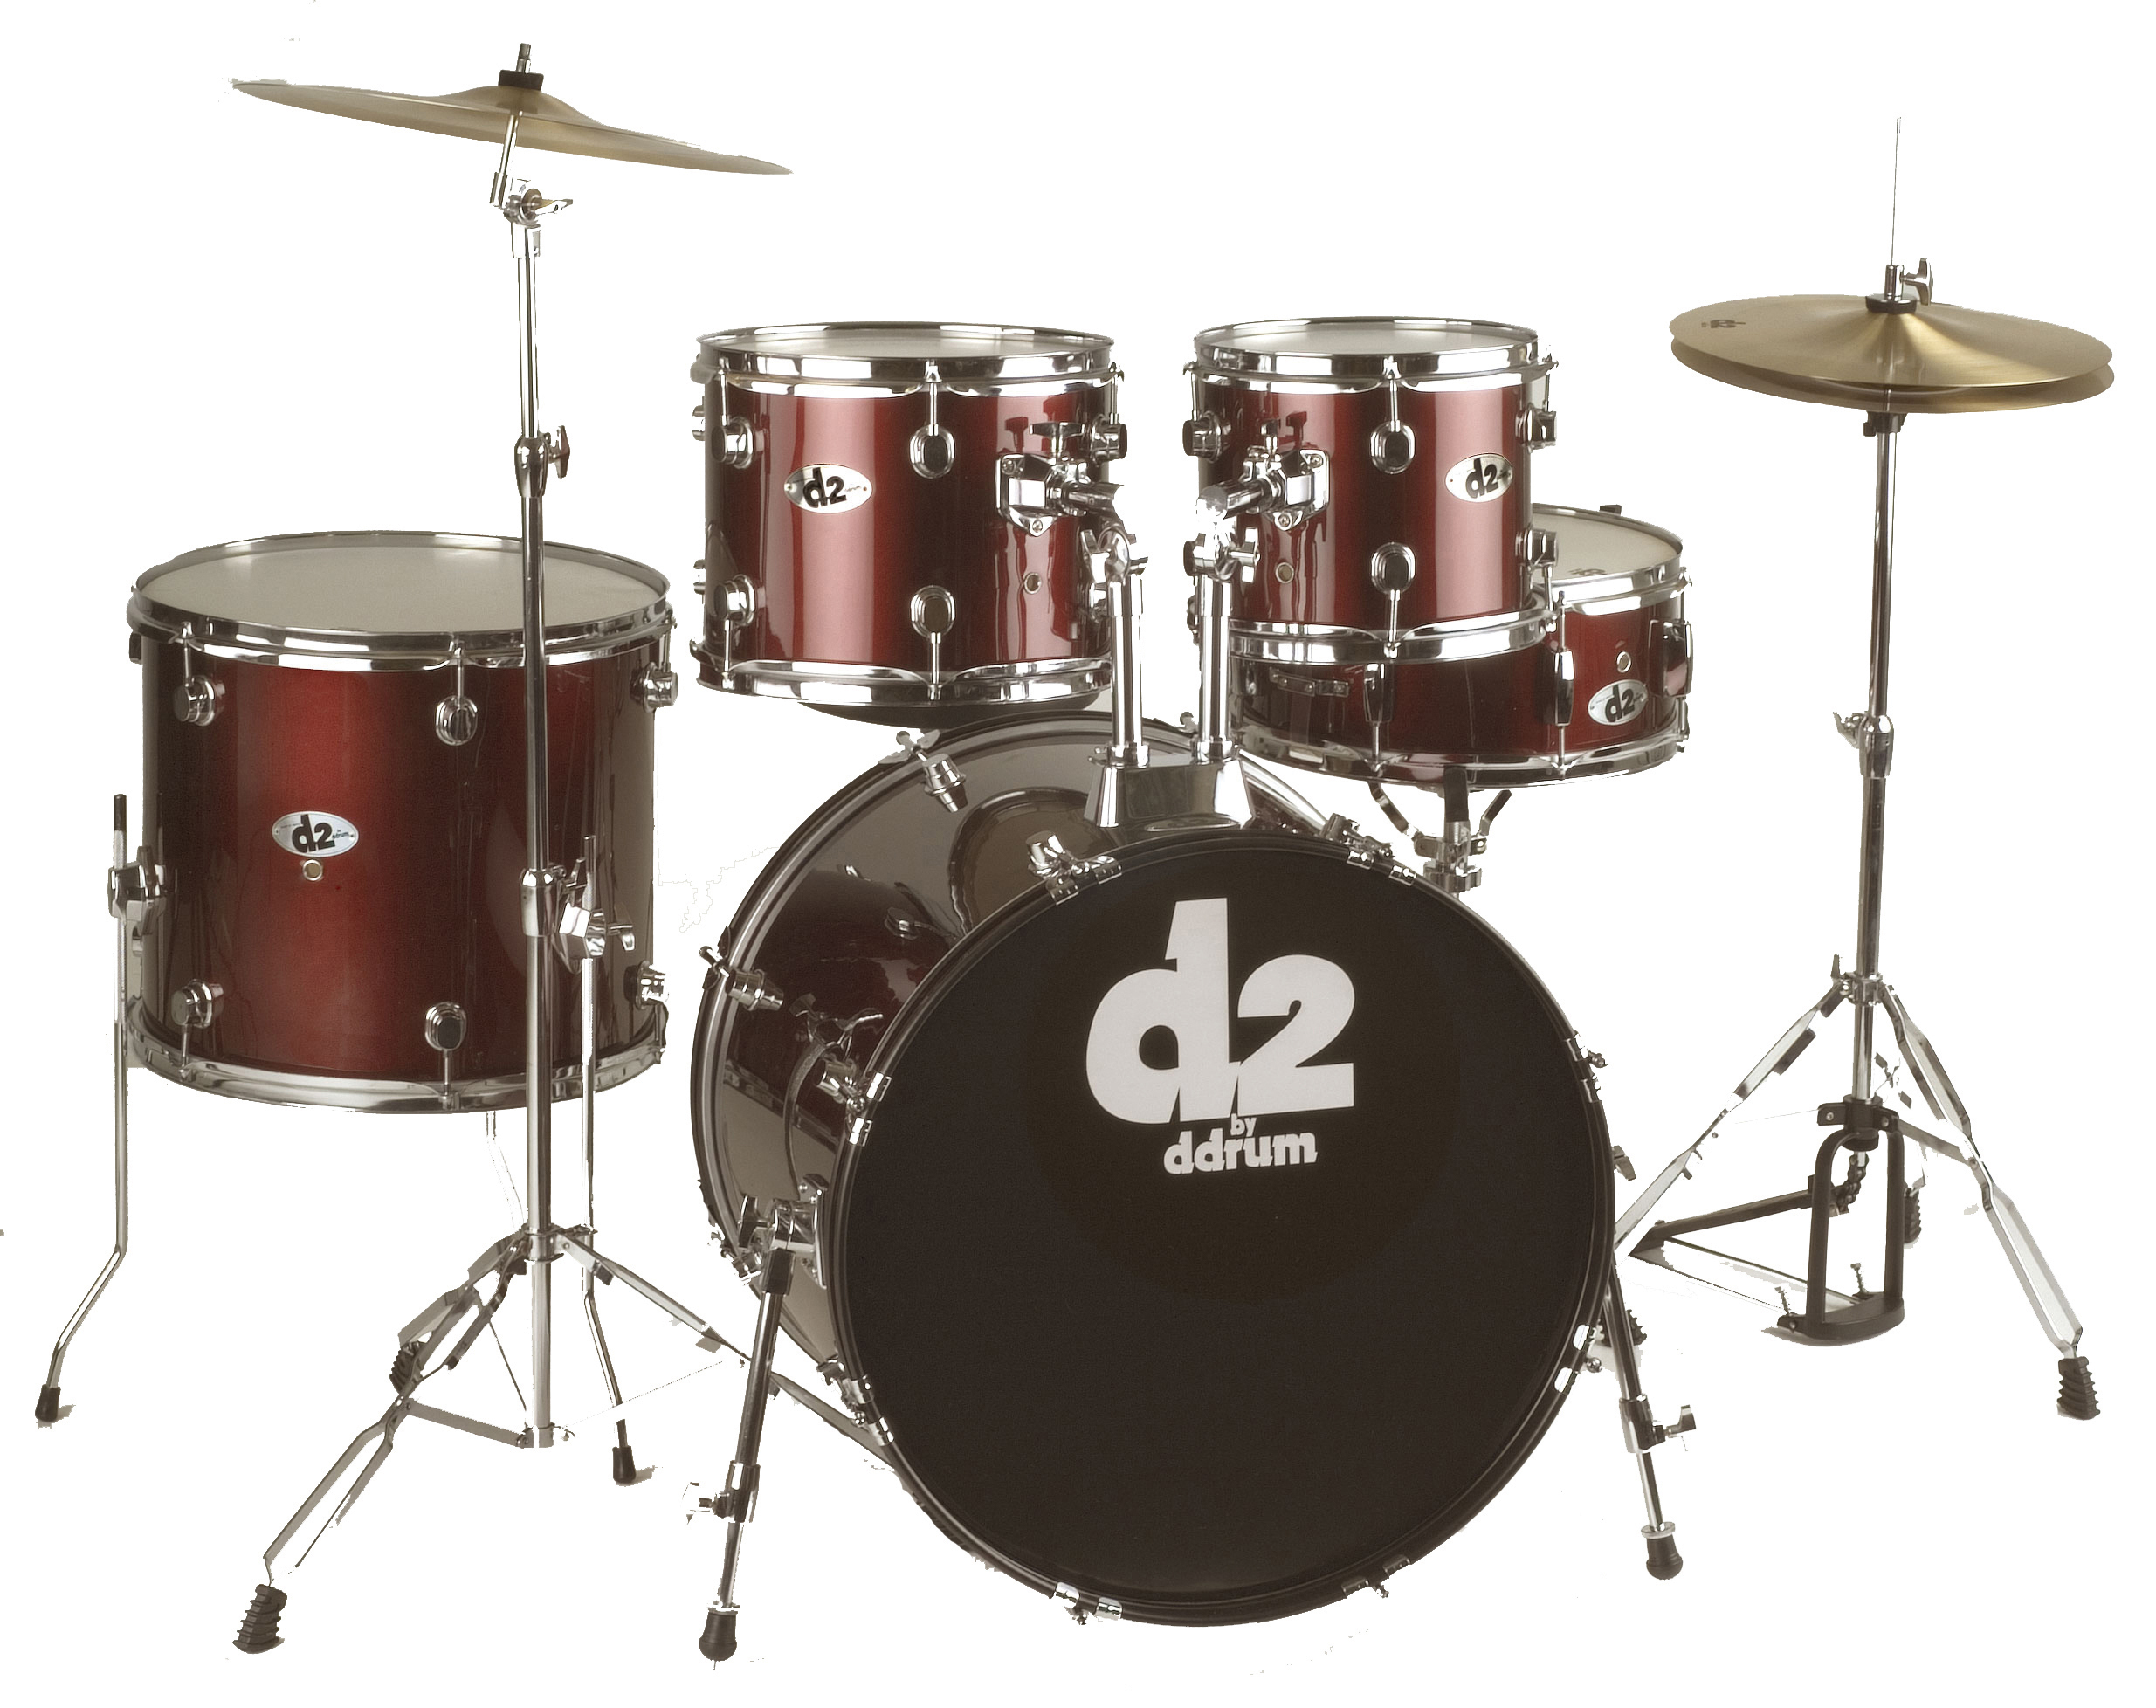 DDrum ddrum D2 Drum Kit with Phat Wrap, 5-Piece - Midnite Black